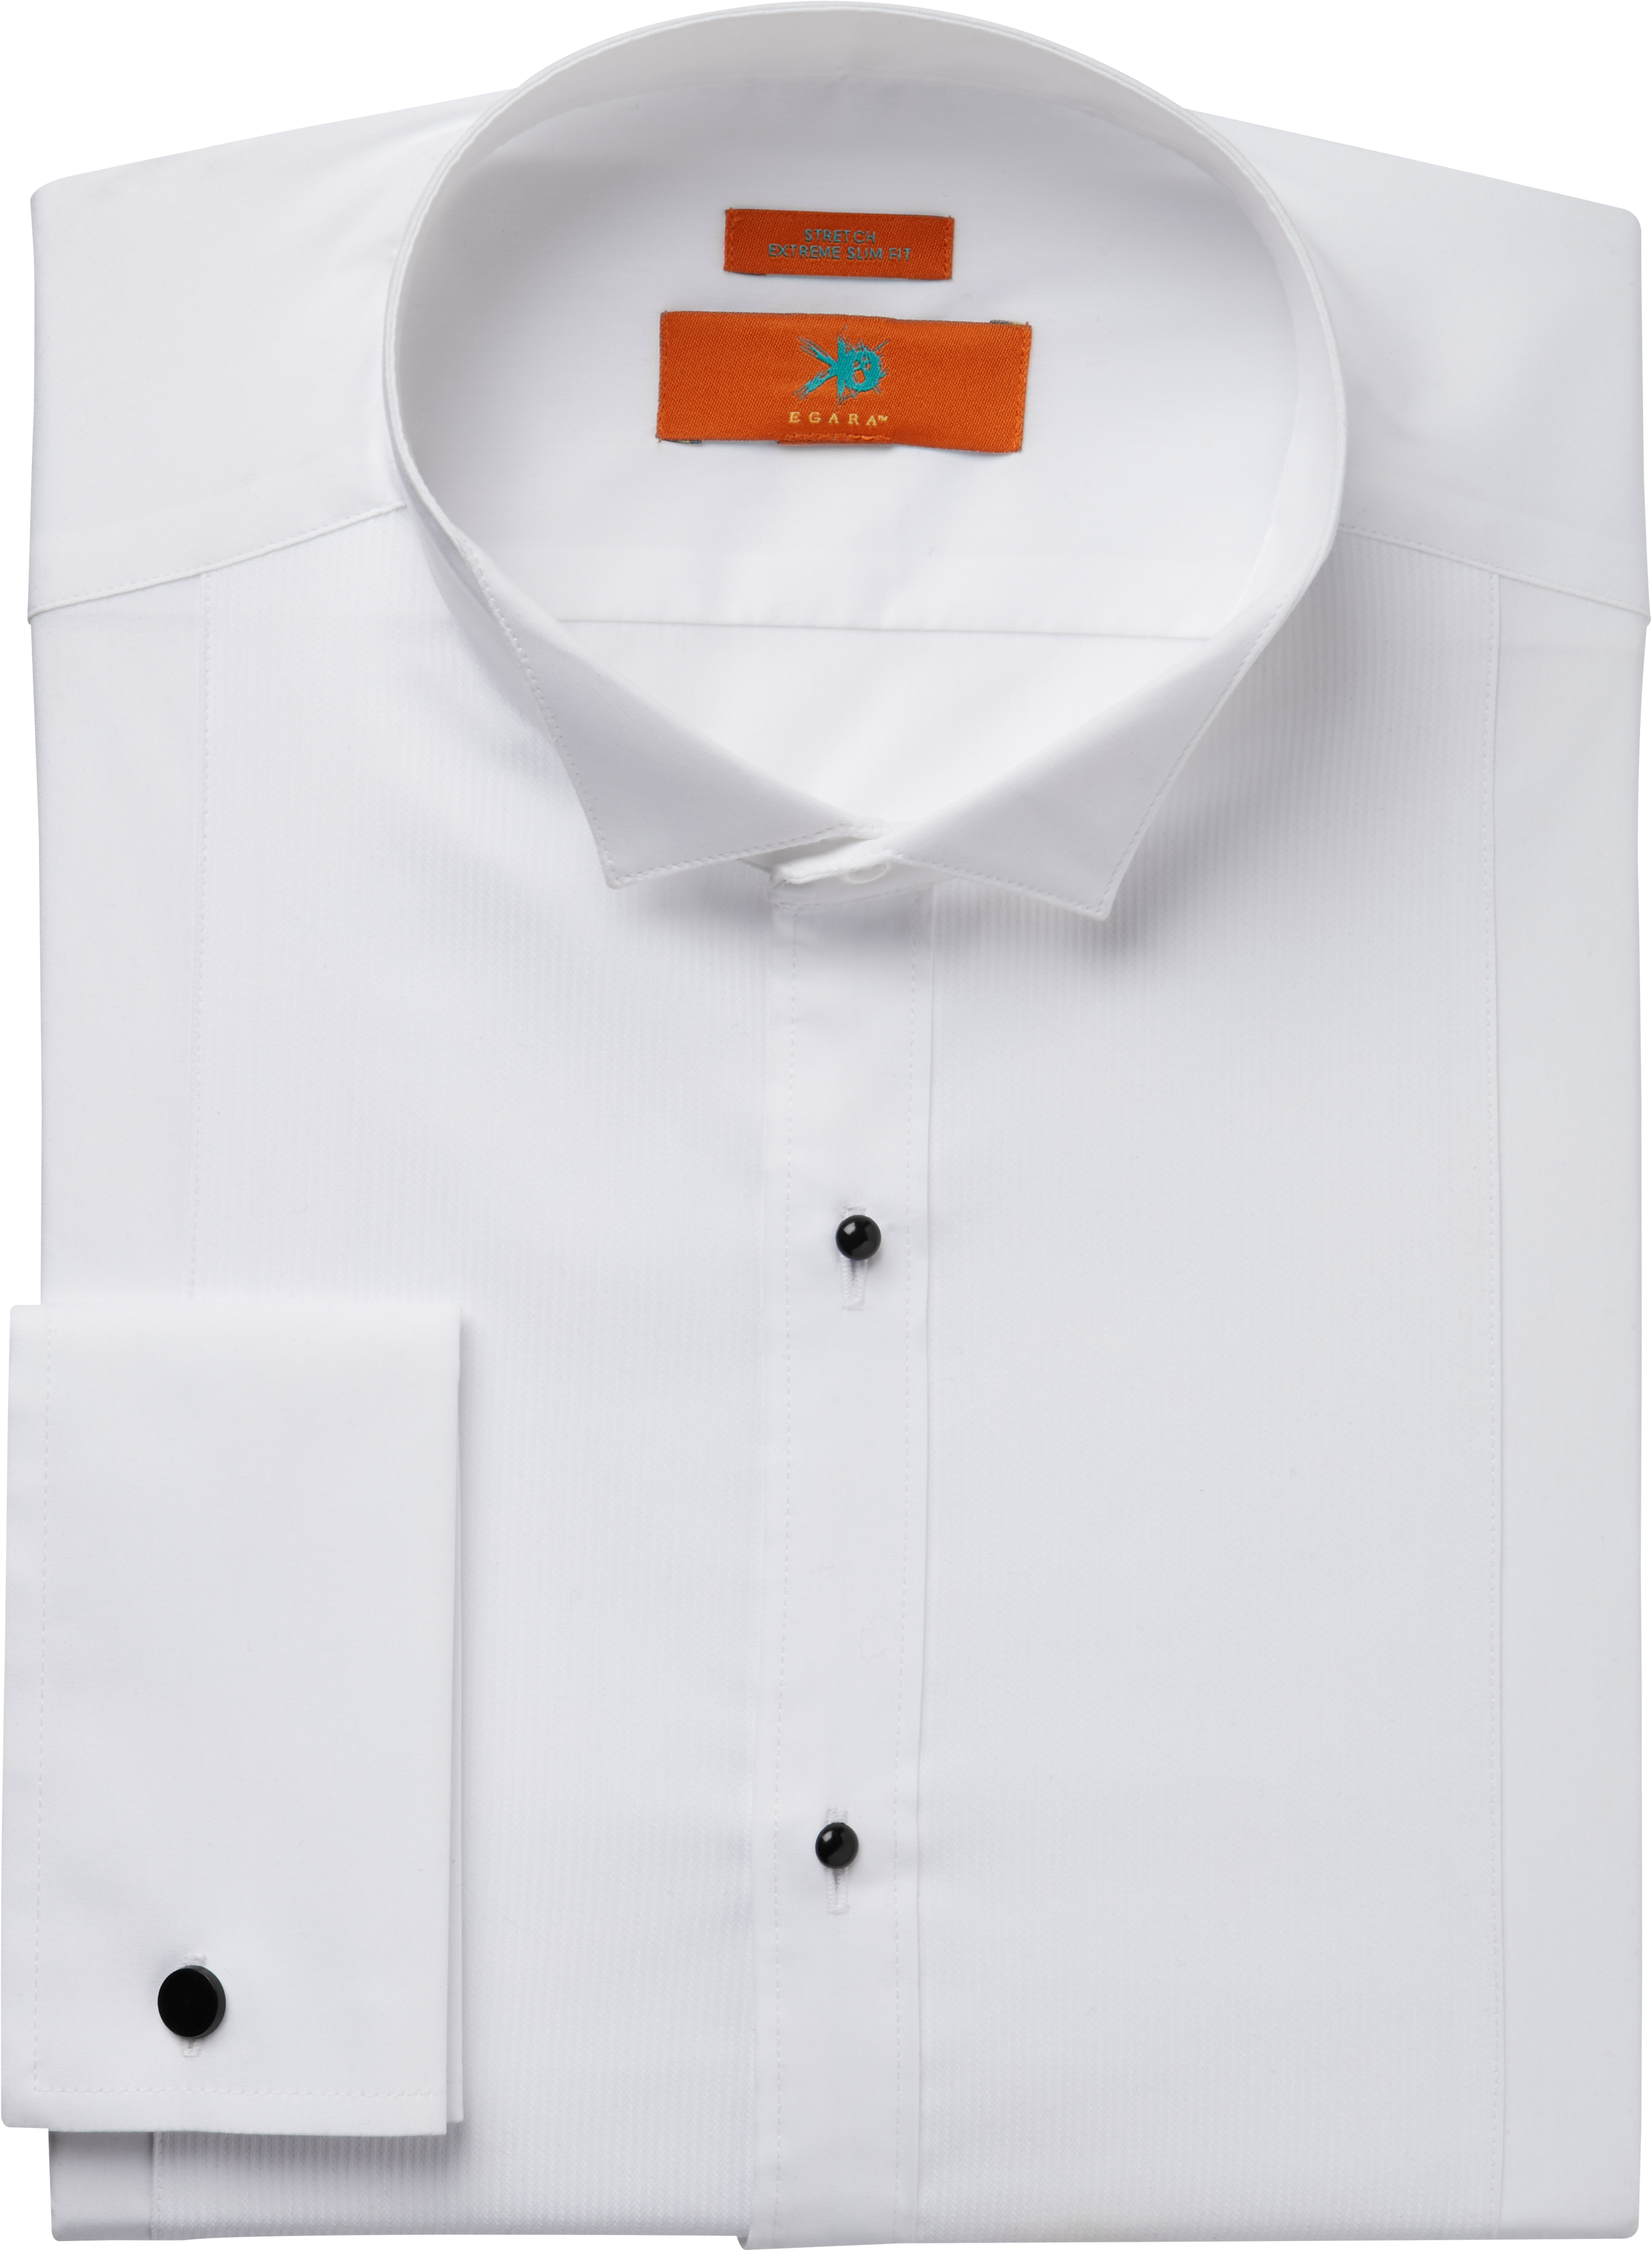 Egara Orange White Extreme Slim Fit French Cuff Dress Shirt - Men's Big ...